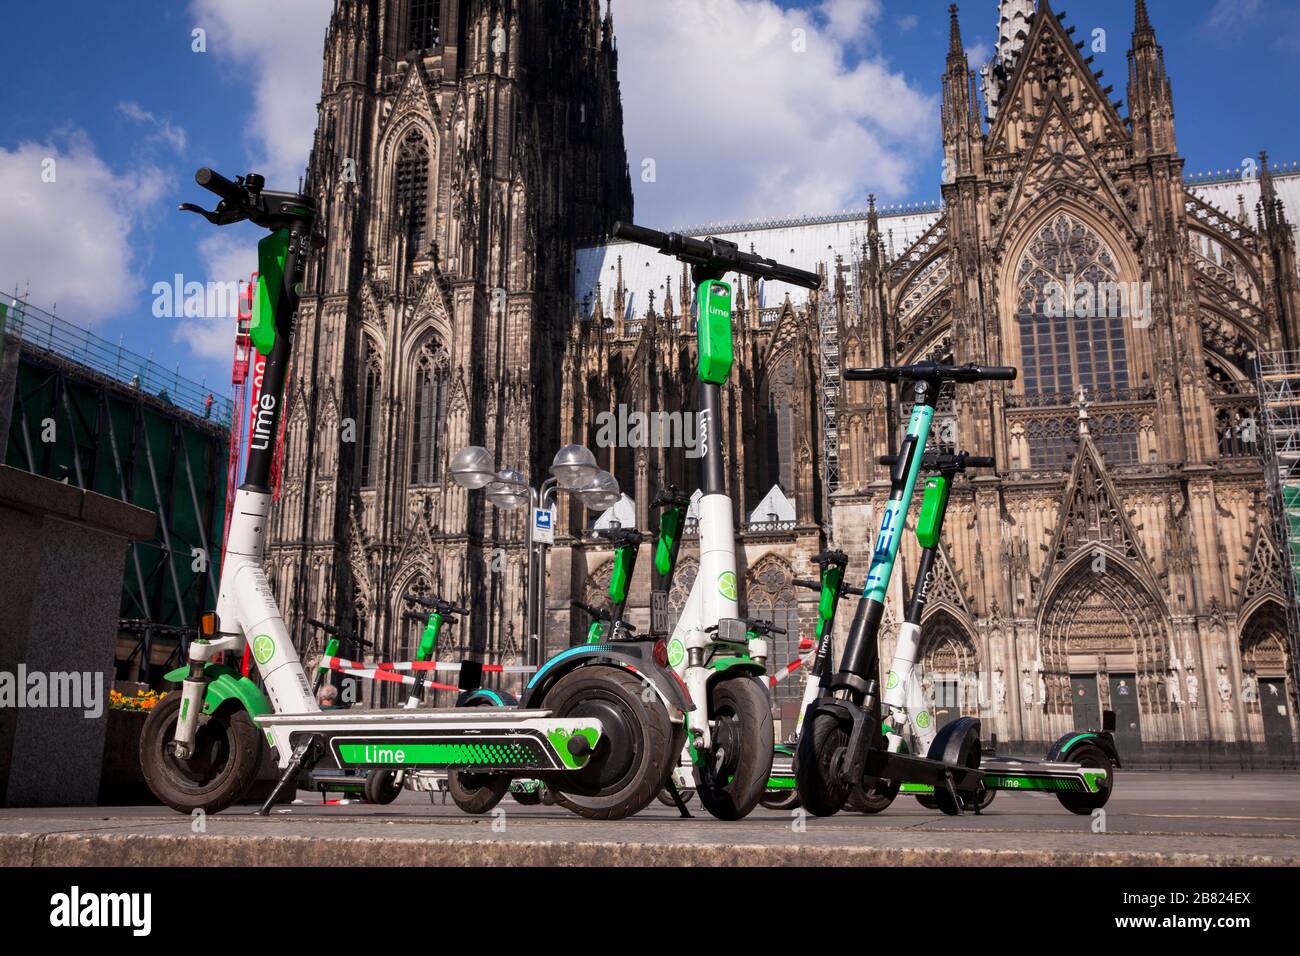 Lime-S scooters eléctricos para alquilar frente a la catedral, Colonia, Alemania. Lime-S Elektroscooters zum mieten vor dem Dom, Koeln, Deutschland. Foto de stock